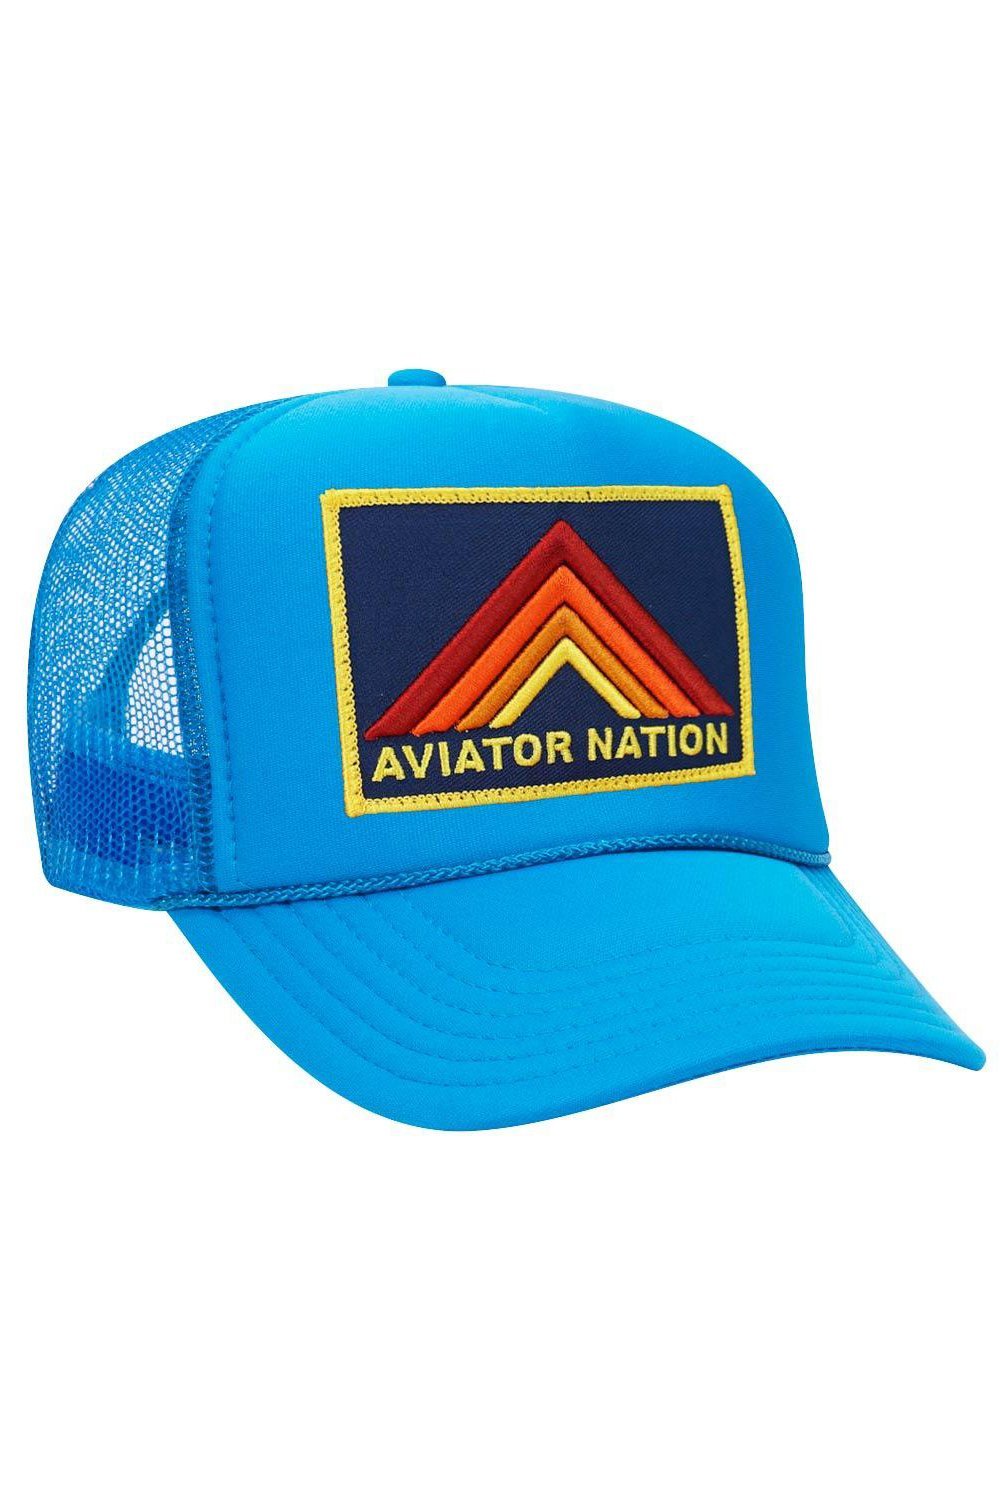 MOUNTAIN STRIPE VINTAGE TRUCKER HAT HATS Aviator Nation OS NEON BLUE 